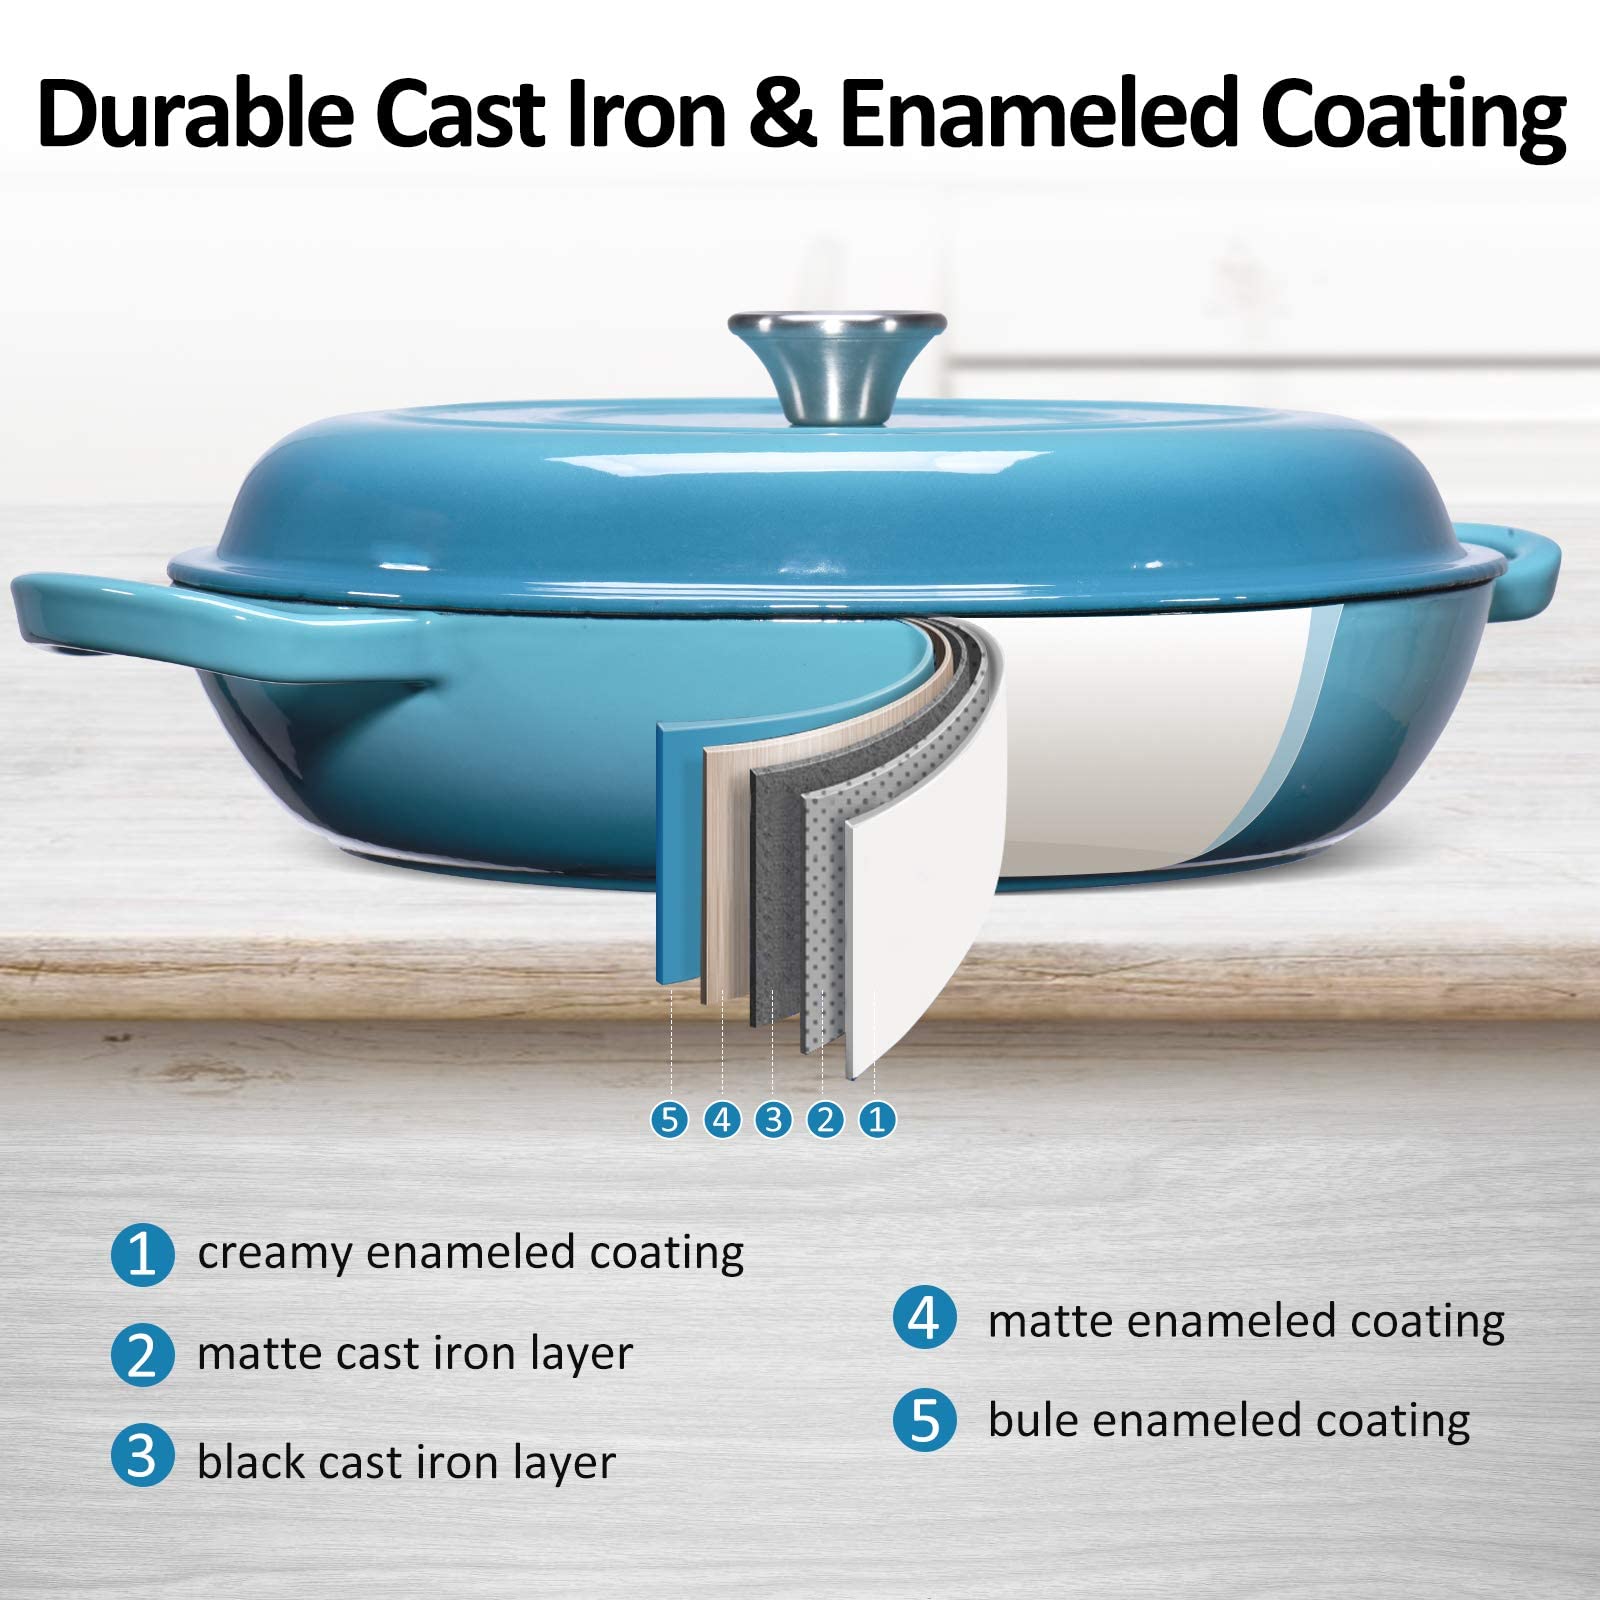 Enamel Cast Iron Casserole Dish with Lid --CSK Cast Iron Braiser Pan with Porcelain Coating, 4 QT Enameled Cast Iron, Steel Knob Cover & Double Loop Handles, Cast Iron Casserole Dish, Card Blue.